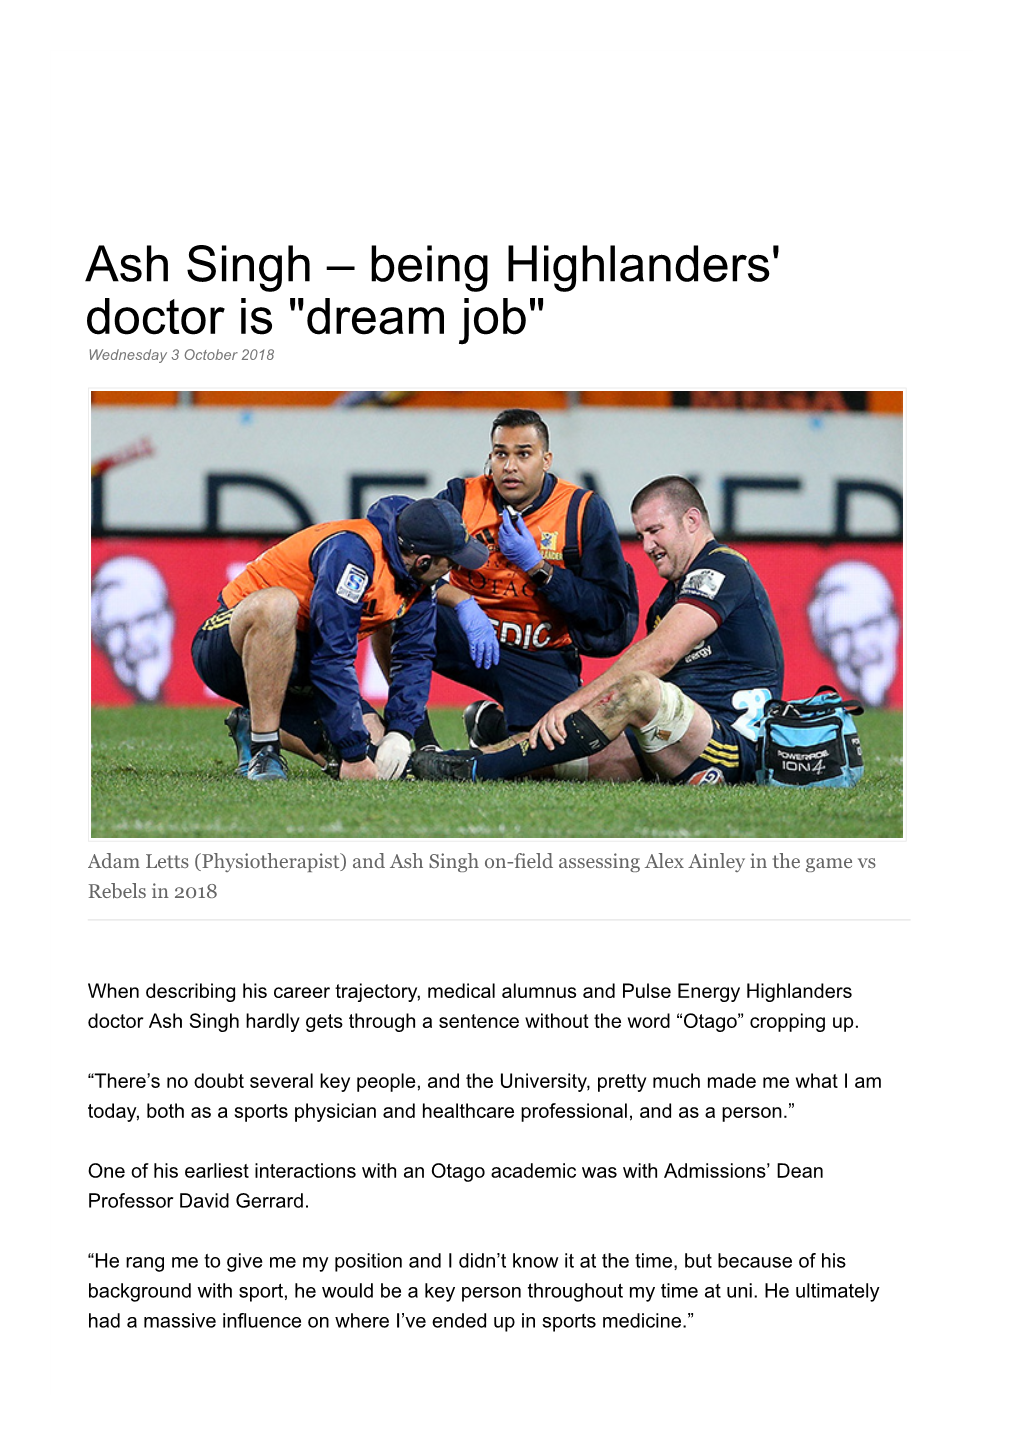 Ash Singh – Being Highlanders' Doctor Is "Dream Job" Wednesday 3 October 2018